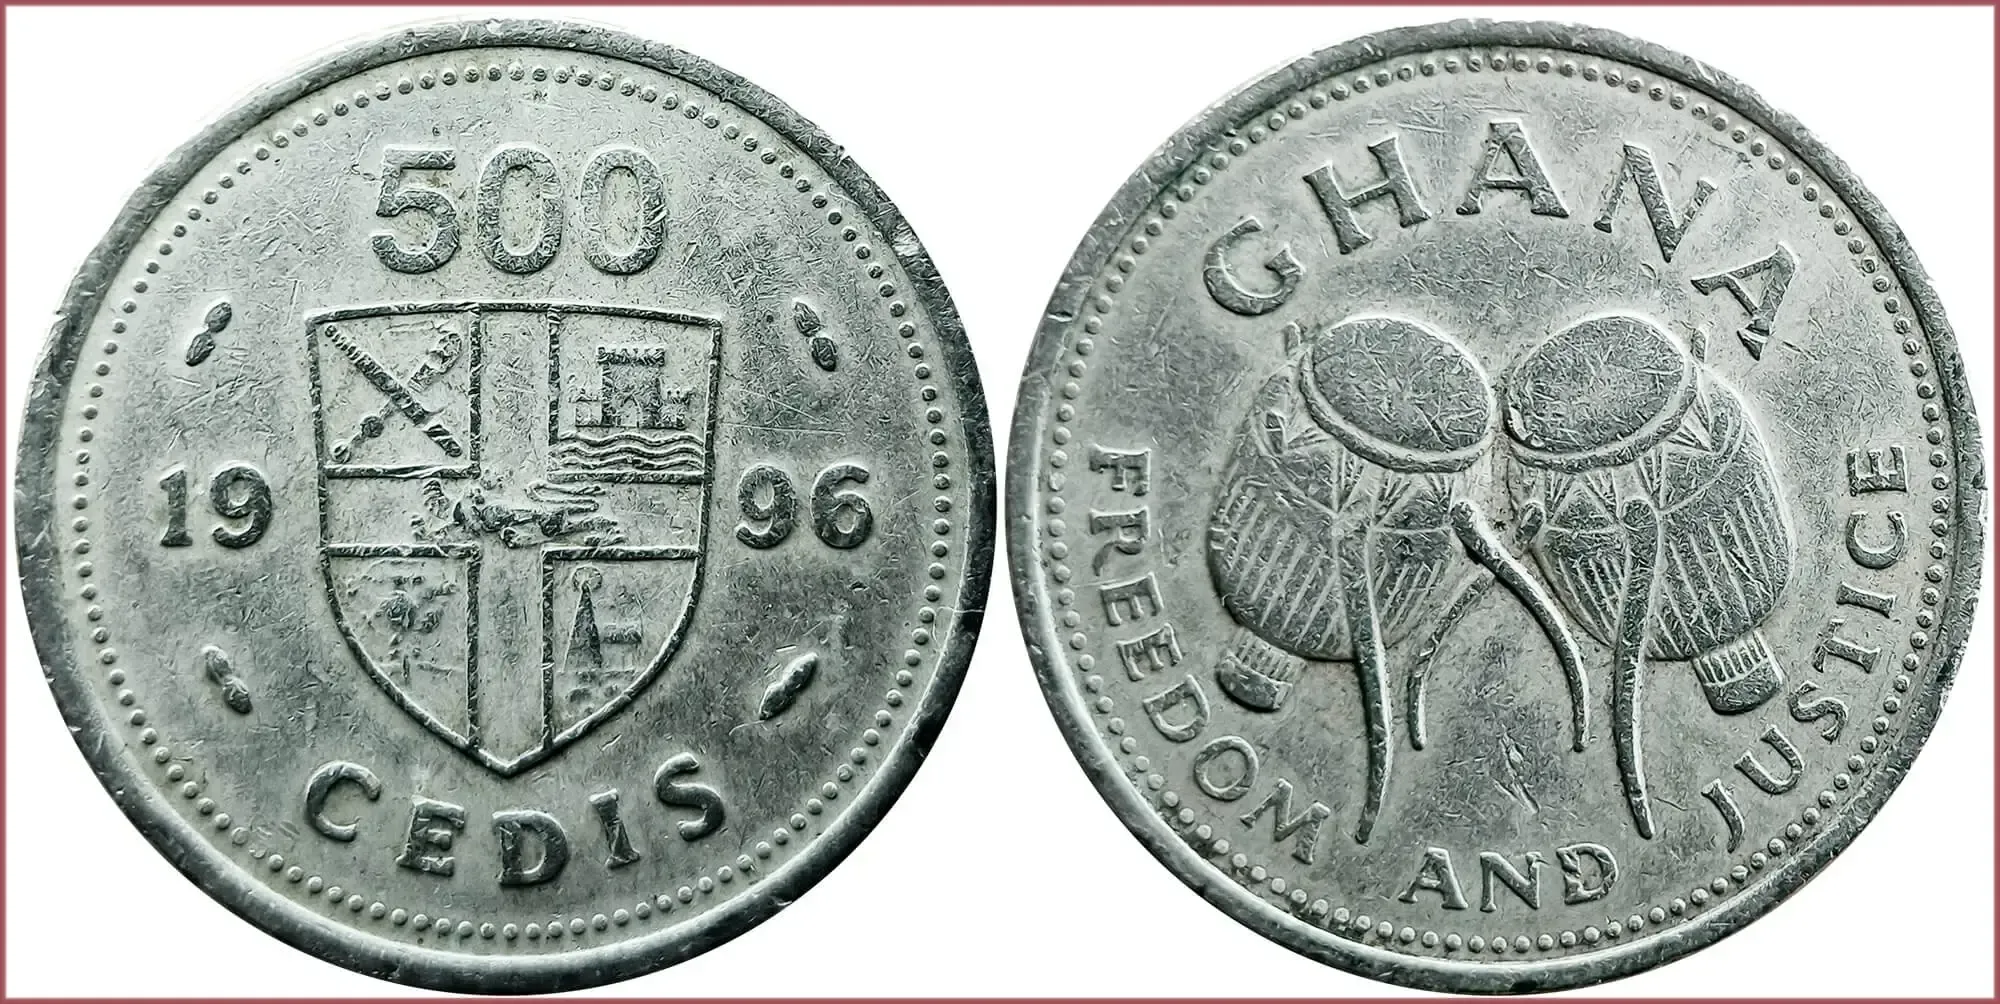 500 cedi, 1996: Republic of Ghana